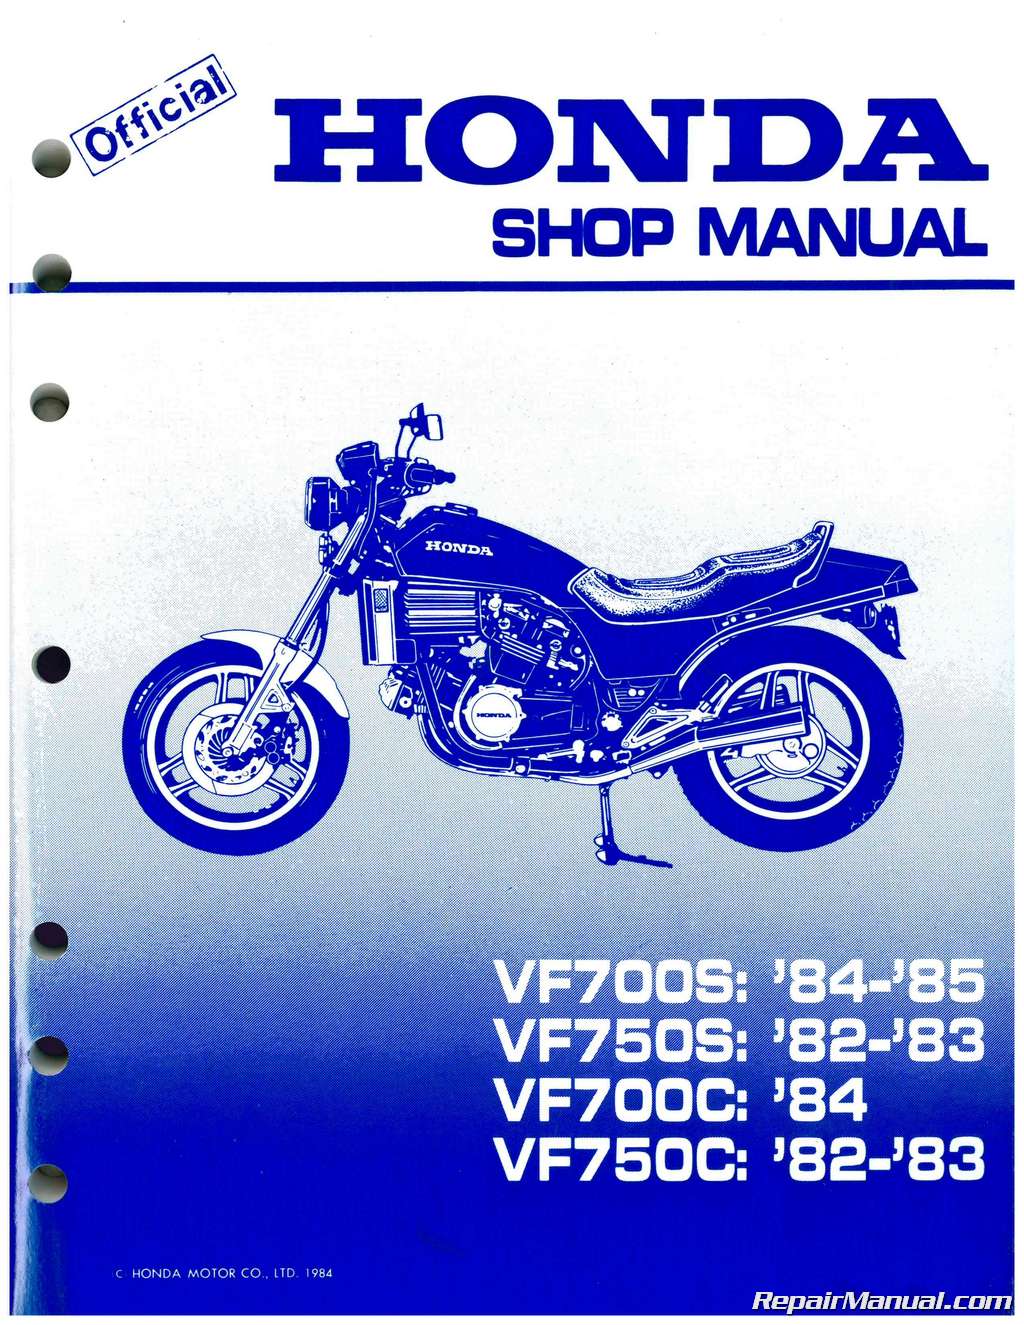 1982 Honda magna v45 750 manual pdf #5